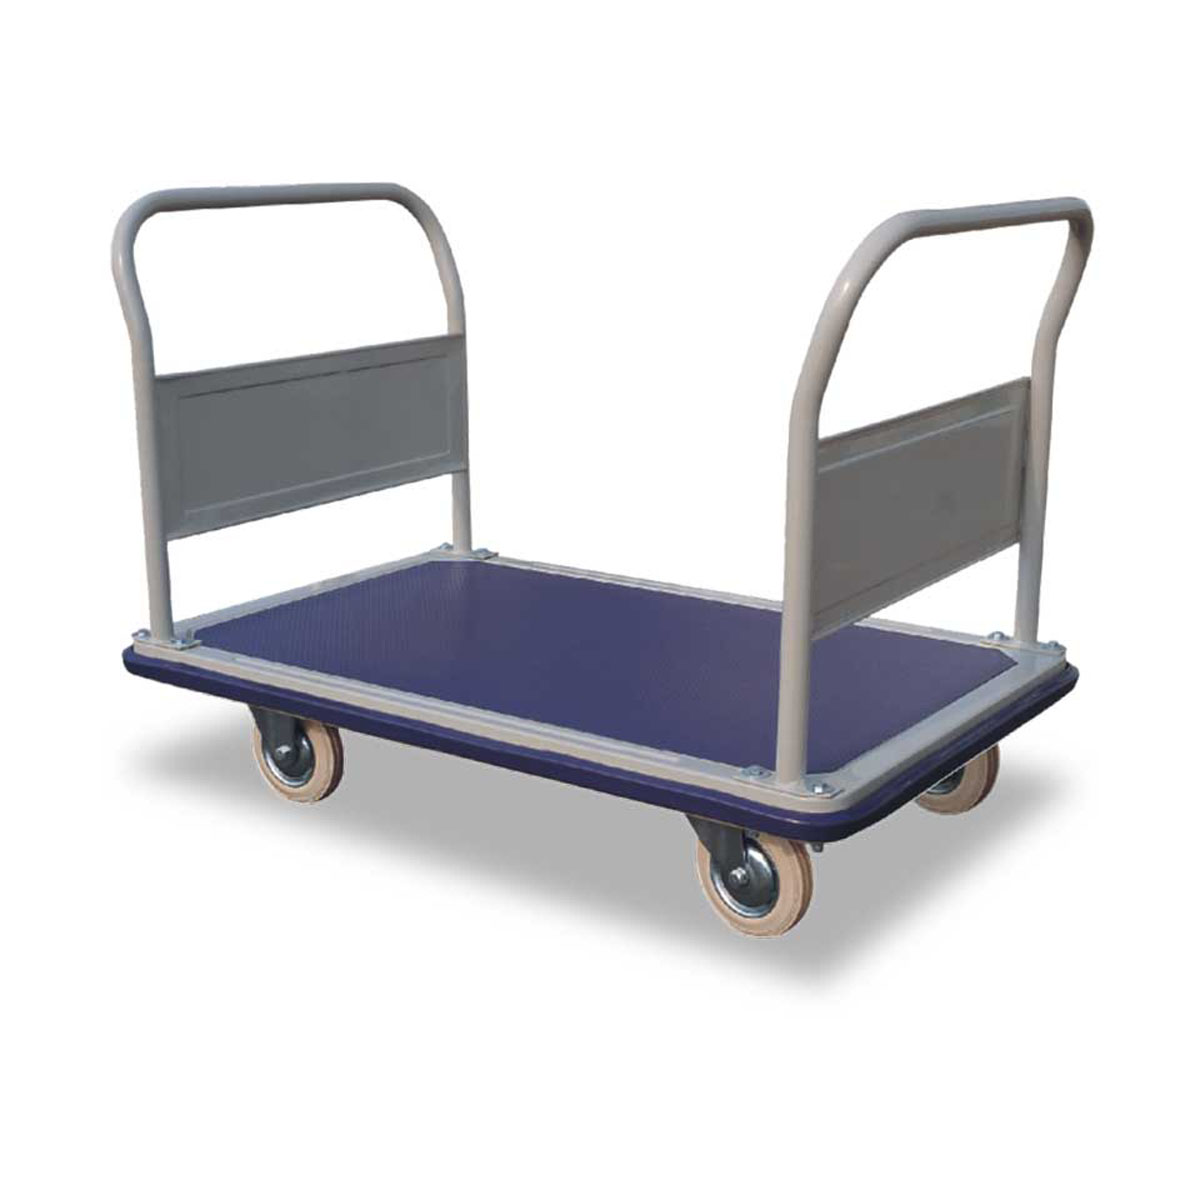 Buy Platform Trolley Vinyl Deck  in Platform Trolleys from Astrolift NZ